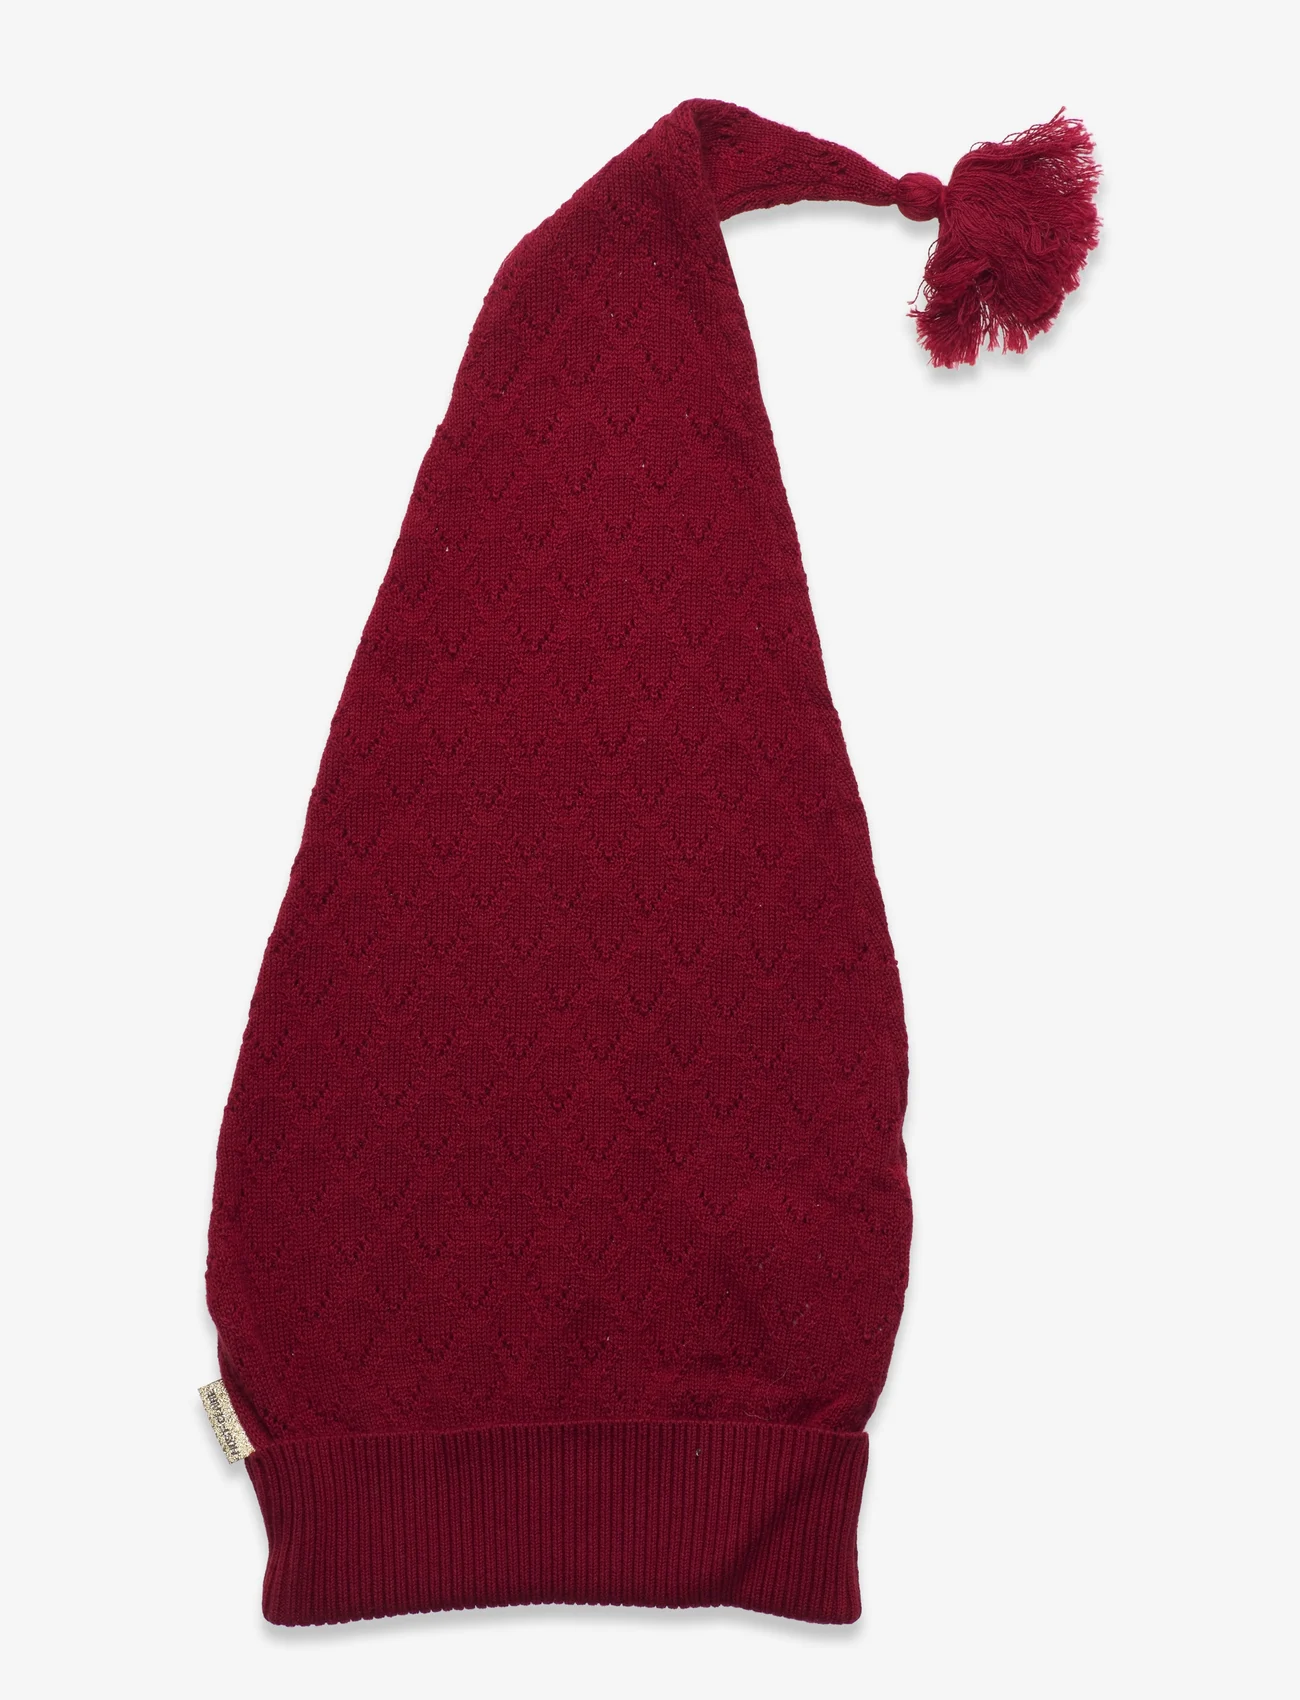 Hust & Claire - Fifi - Christmas hat - kostüm-zubehör - teaberry - 1